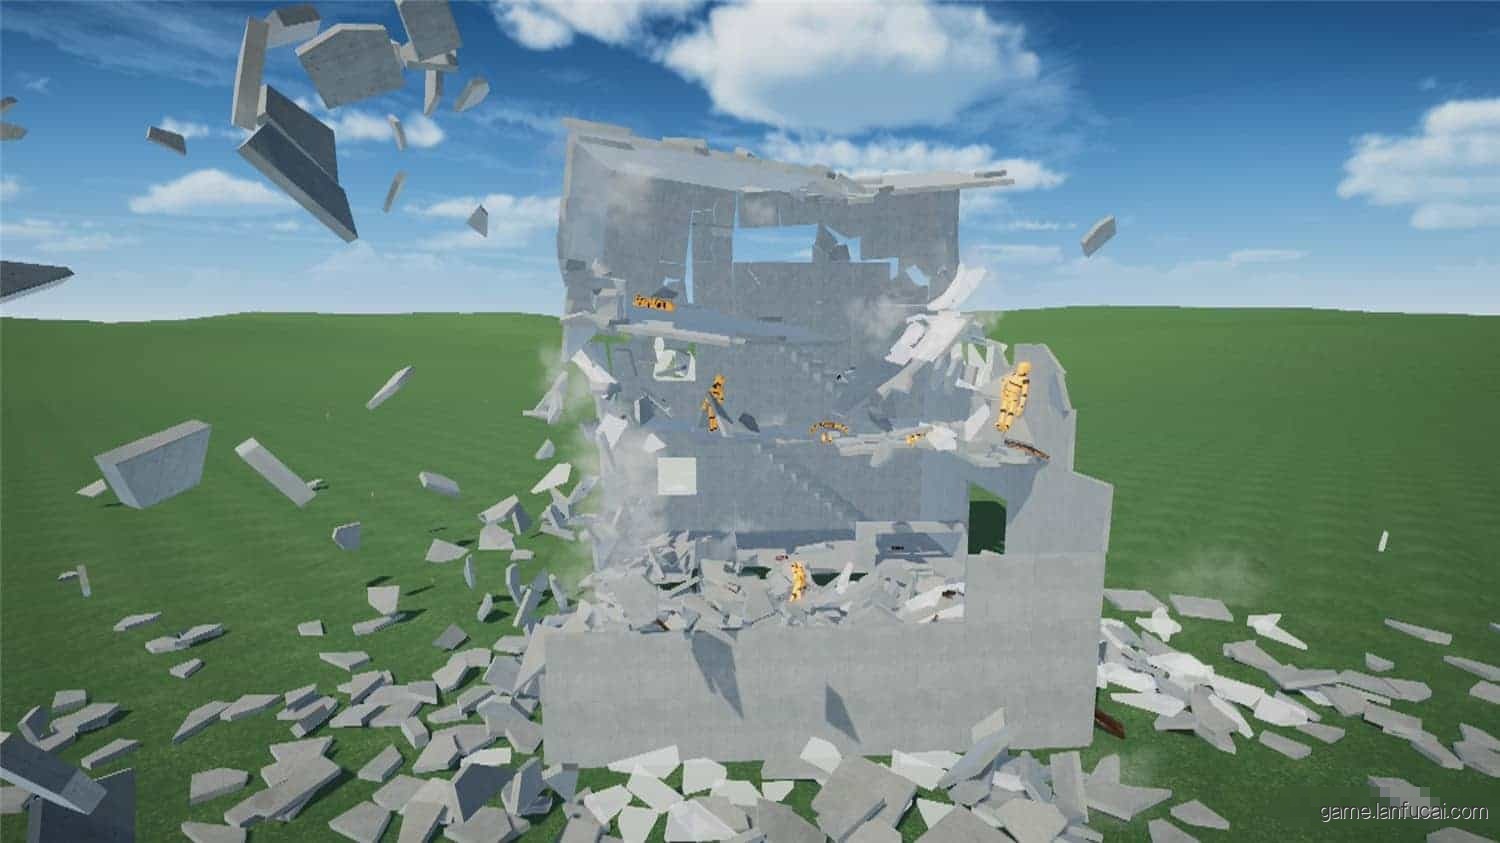 Destructive Physics – Destruction Simulator